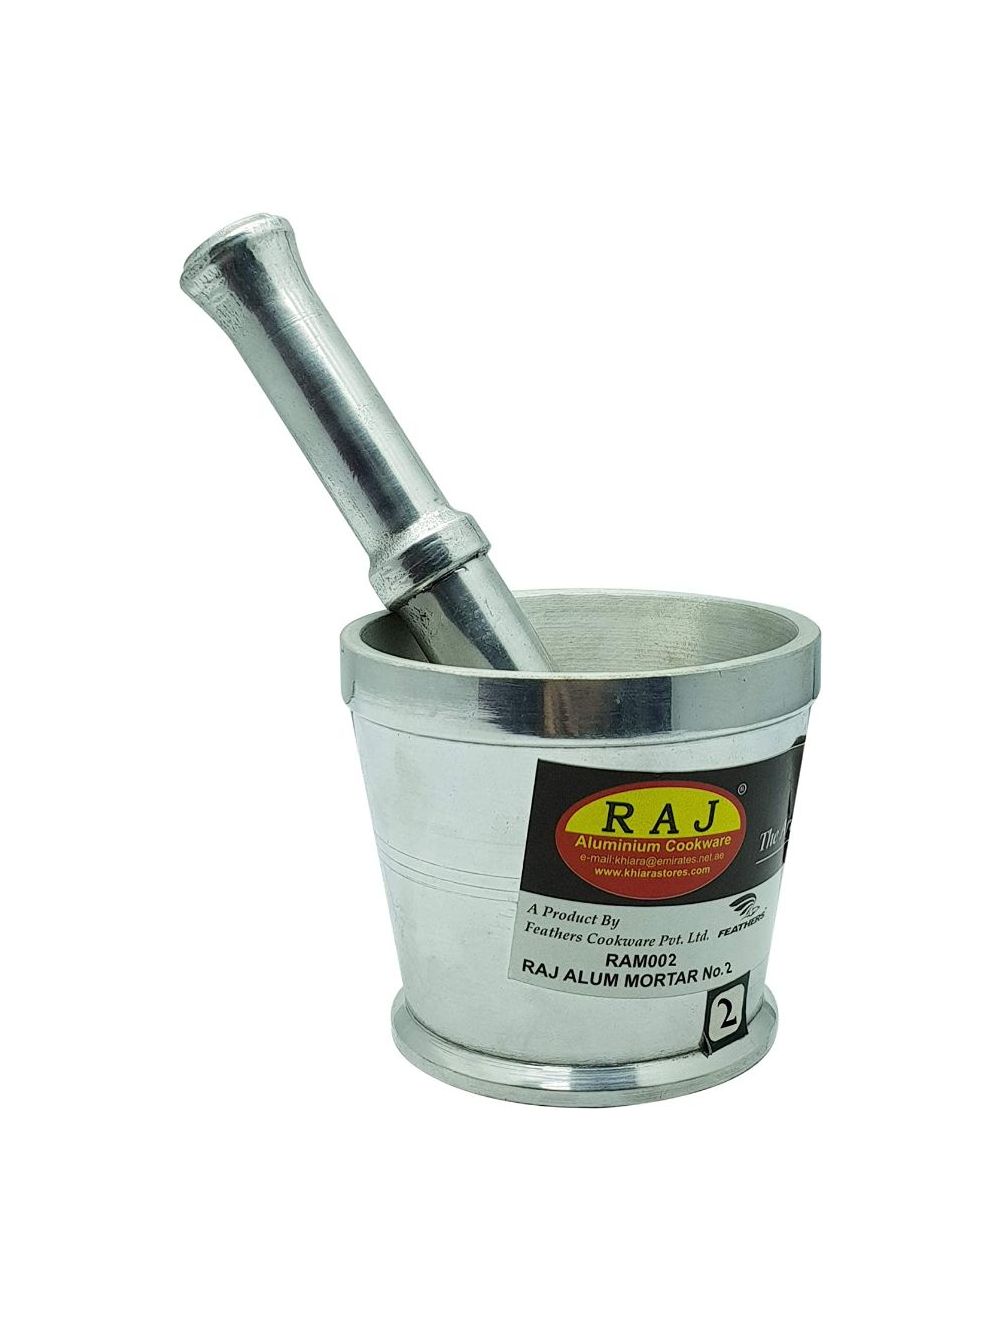 Raj Aluminium Mortar With Stand, Silver, RAM002